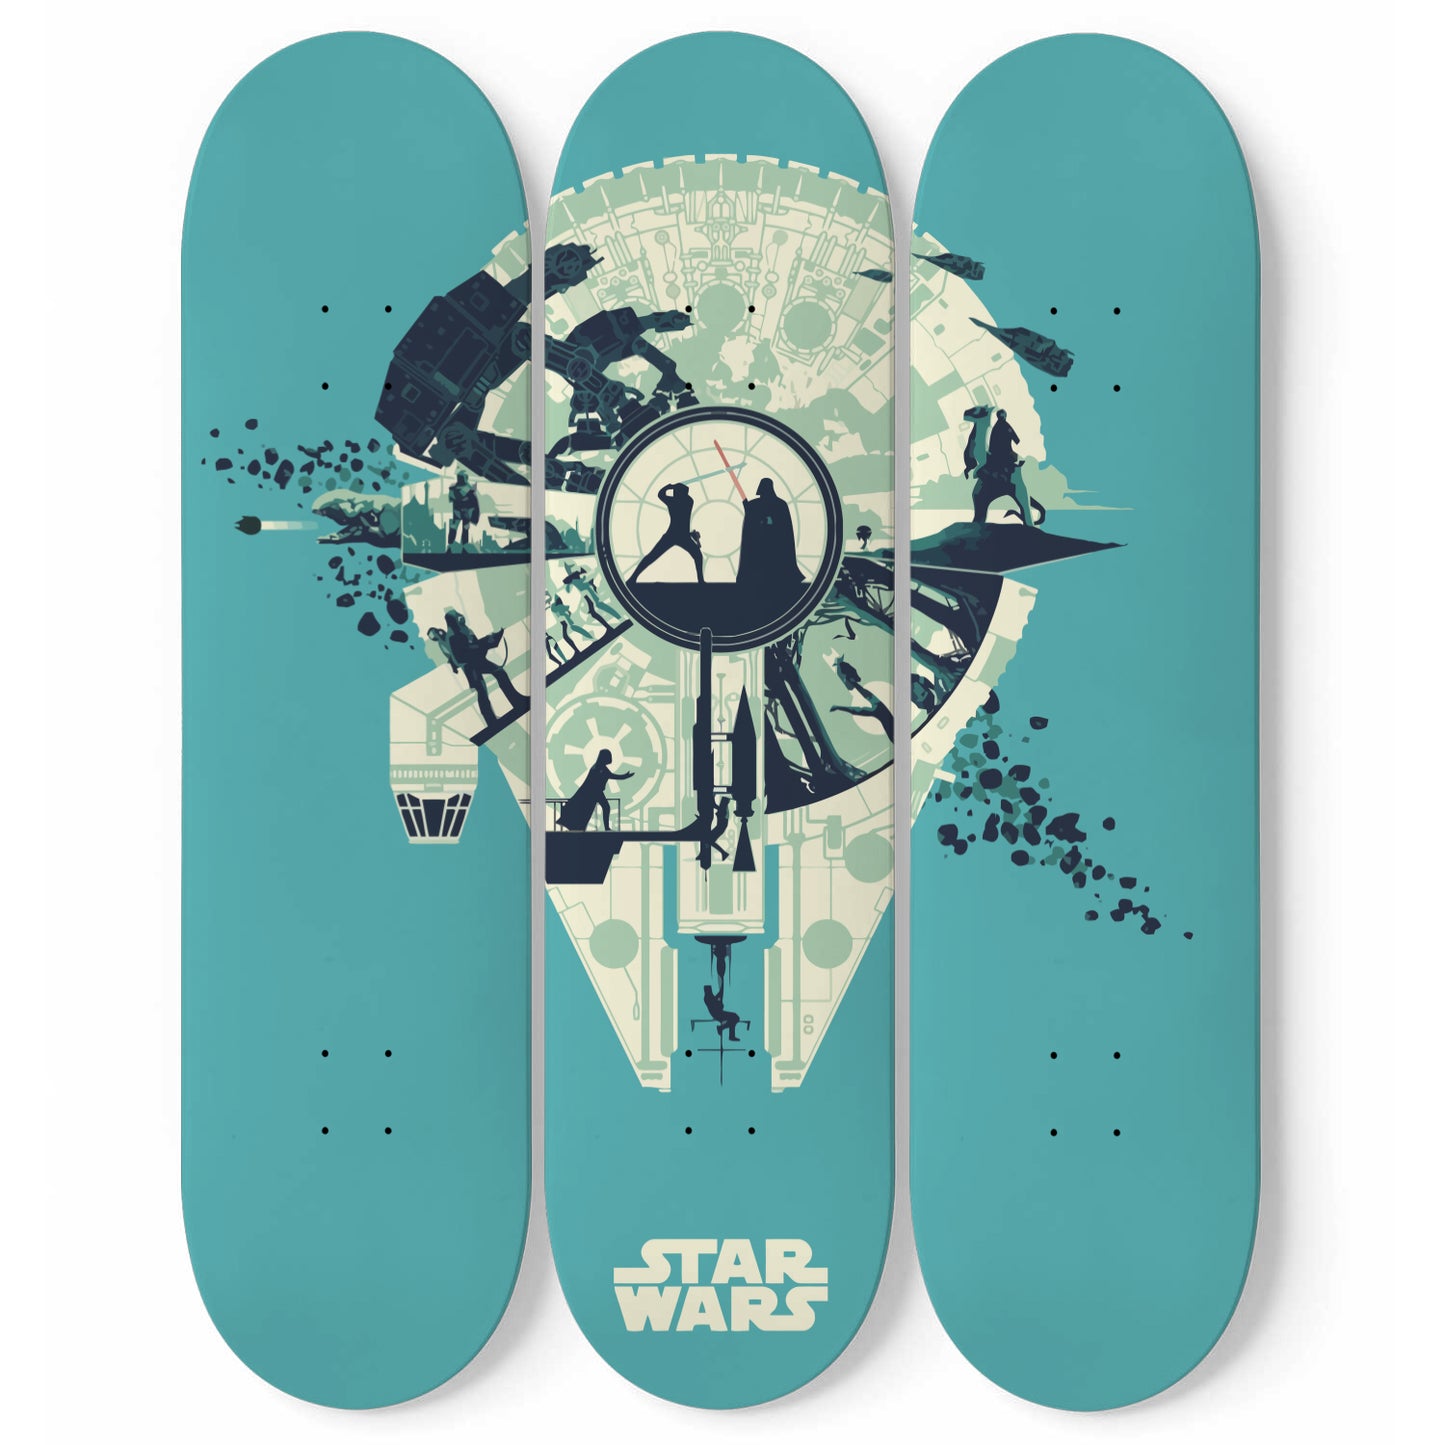 Star Wars - Millennium Falcon Silhouette - 3-piece Skateboard Wall Art